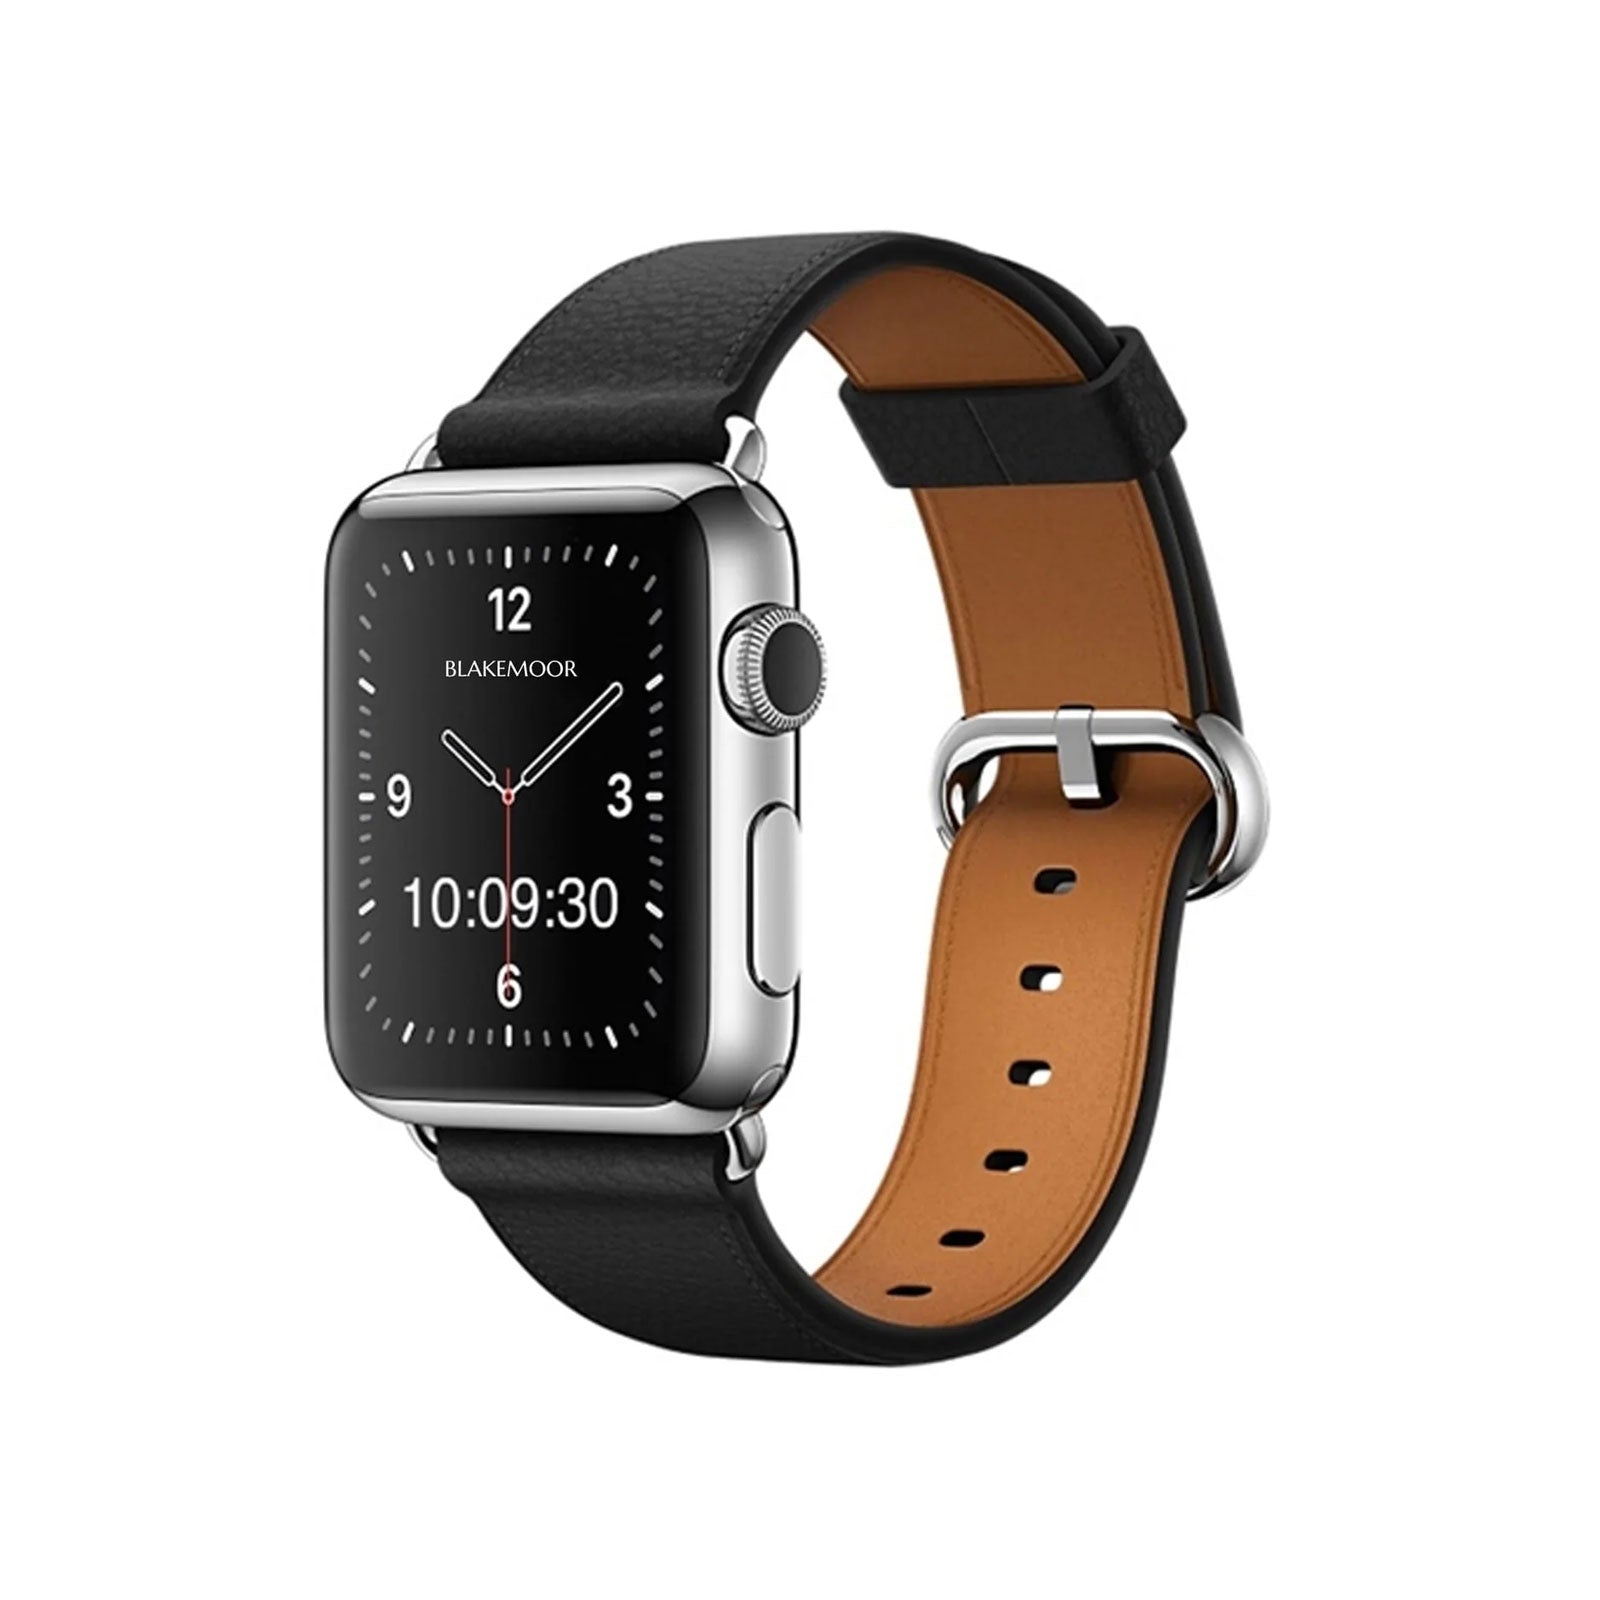 Gullane Black Watch Strap For Apple